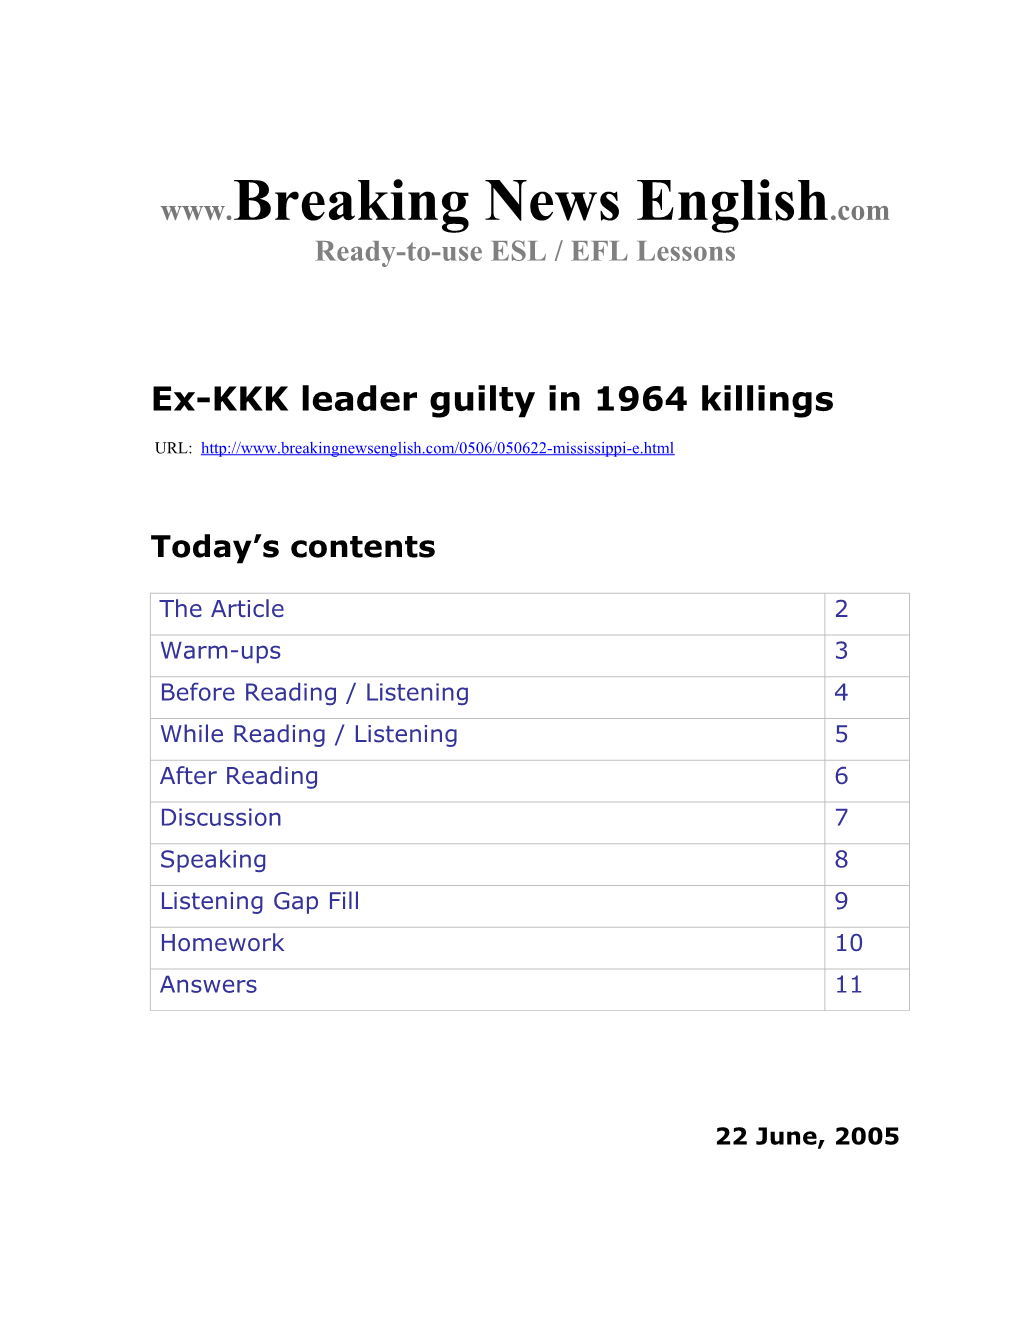 Ex-KKK Leader Guilty in 1964 Killings